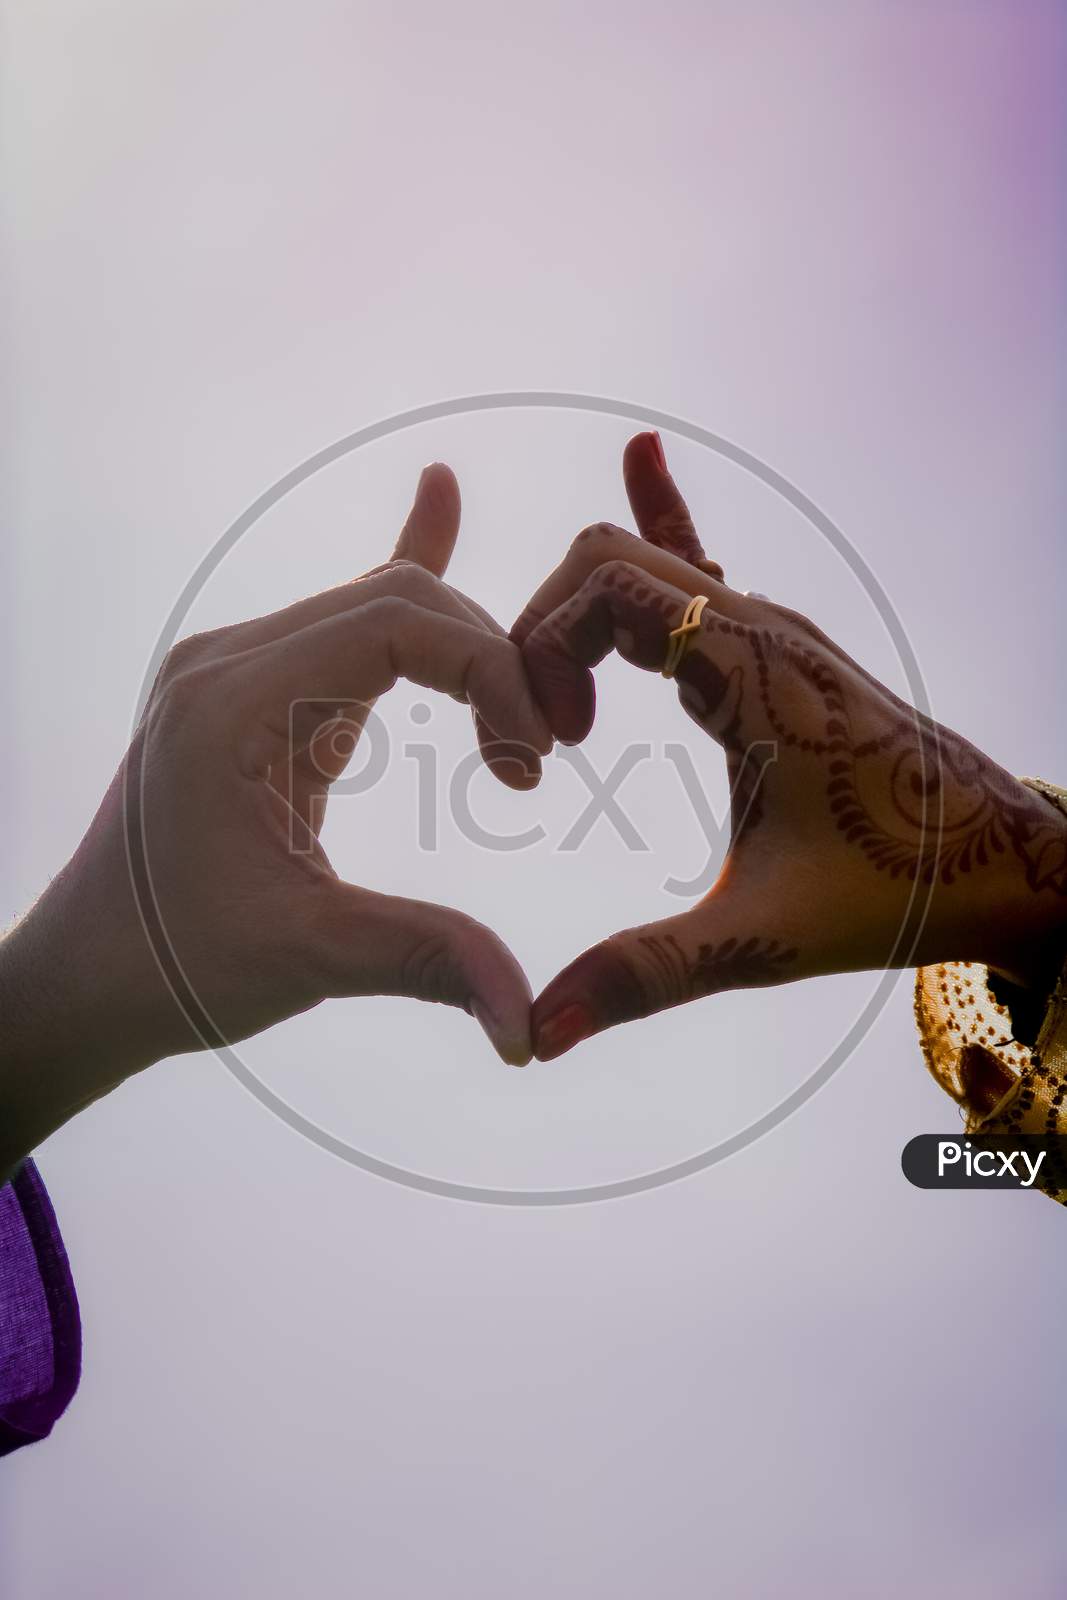 A Man And Woman Posing hands Like Heart Shape.